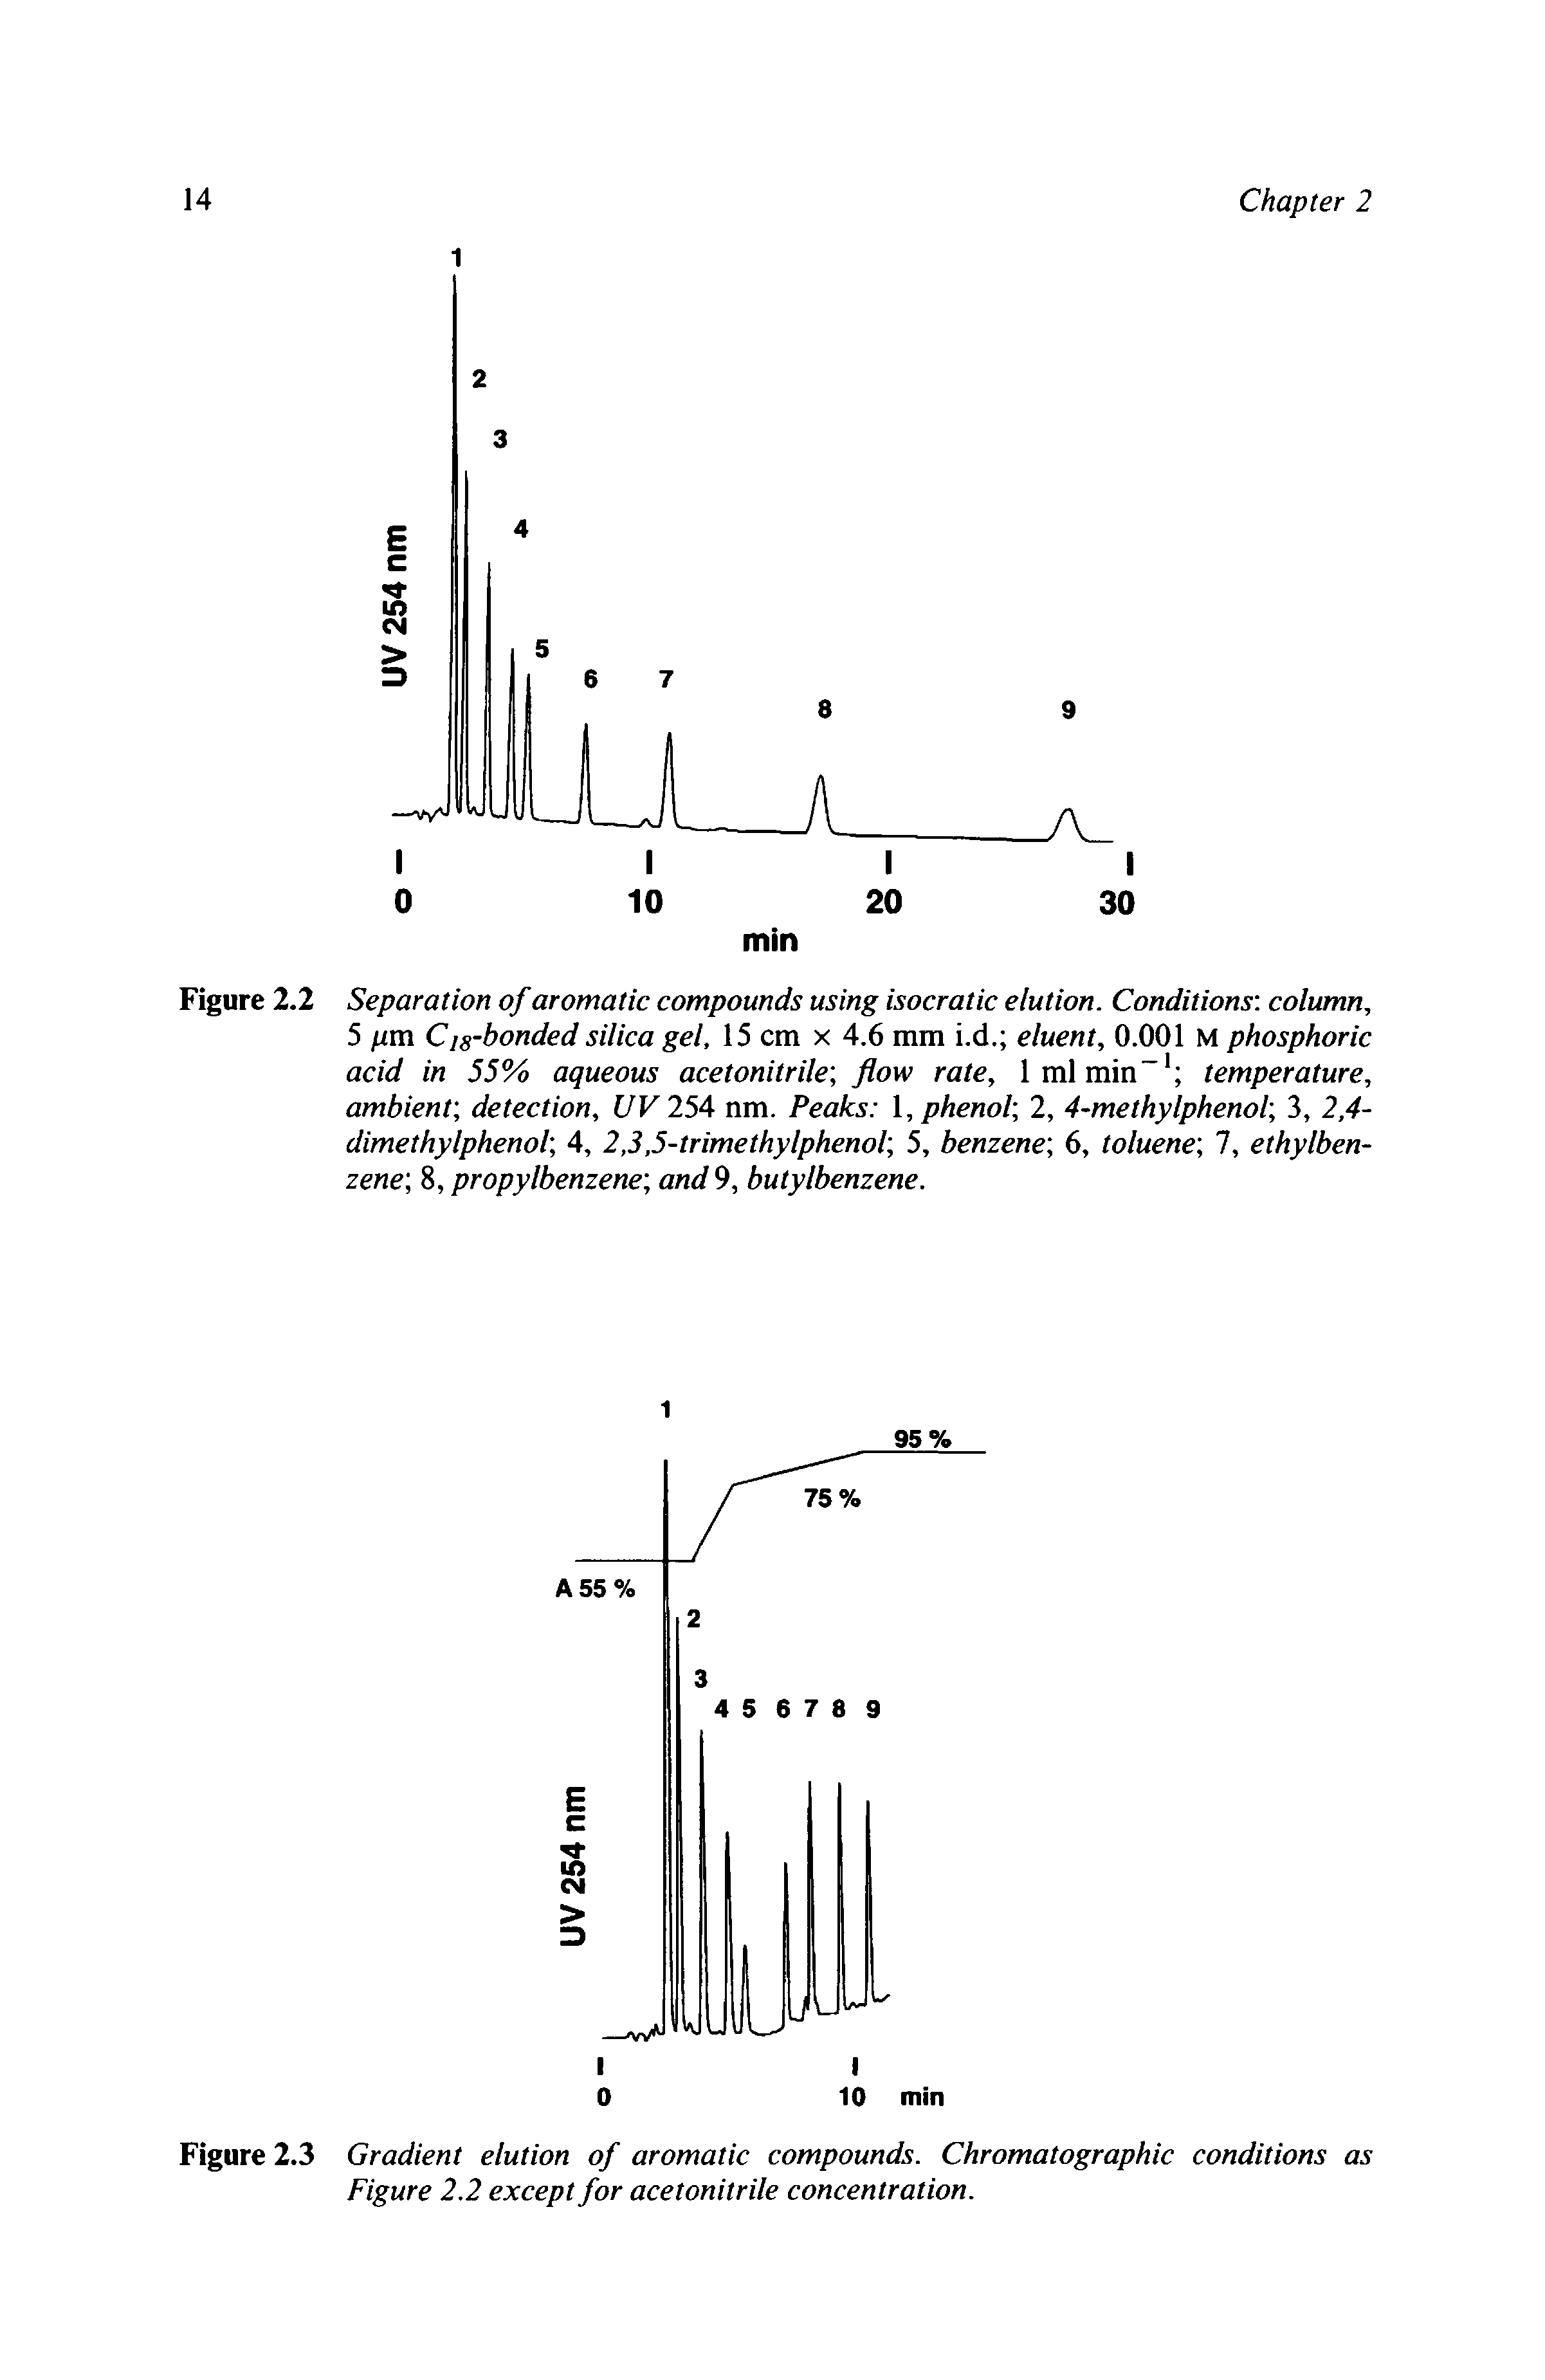 Figure 2.2 Separation of aromatic compounds using isocratic elution. Conditions column, 5 pm Cis-bonded silica gel, 15 cm x 4.6 mm i.d. eluent, 0.001 M phosphoric acid in 55% aqueous acetonitrile flow rate, 1ml min-1 temperature, ambient, detection, UV 254 nm. Peaks 1, phenol, 2, 4-methylphenol 3, 2,4-dimethylphenol 4, 2,3,5-trimethylphenol 5, benzene, 6, toluene, 1, ethylbenzene, 8, propylbenzene and 9, butylbenzene.